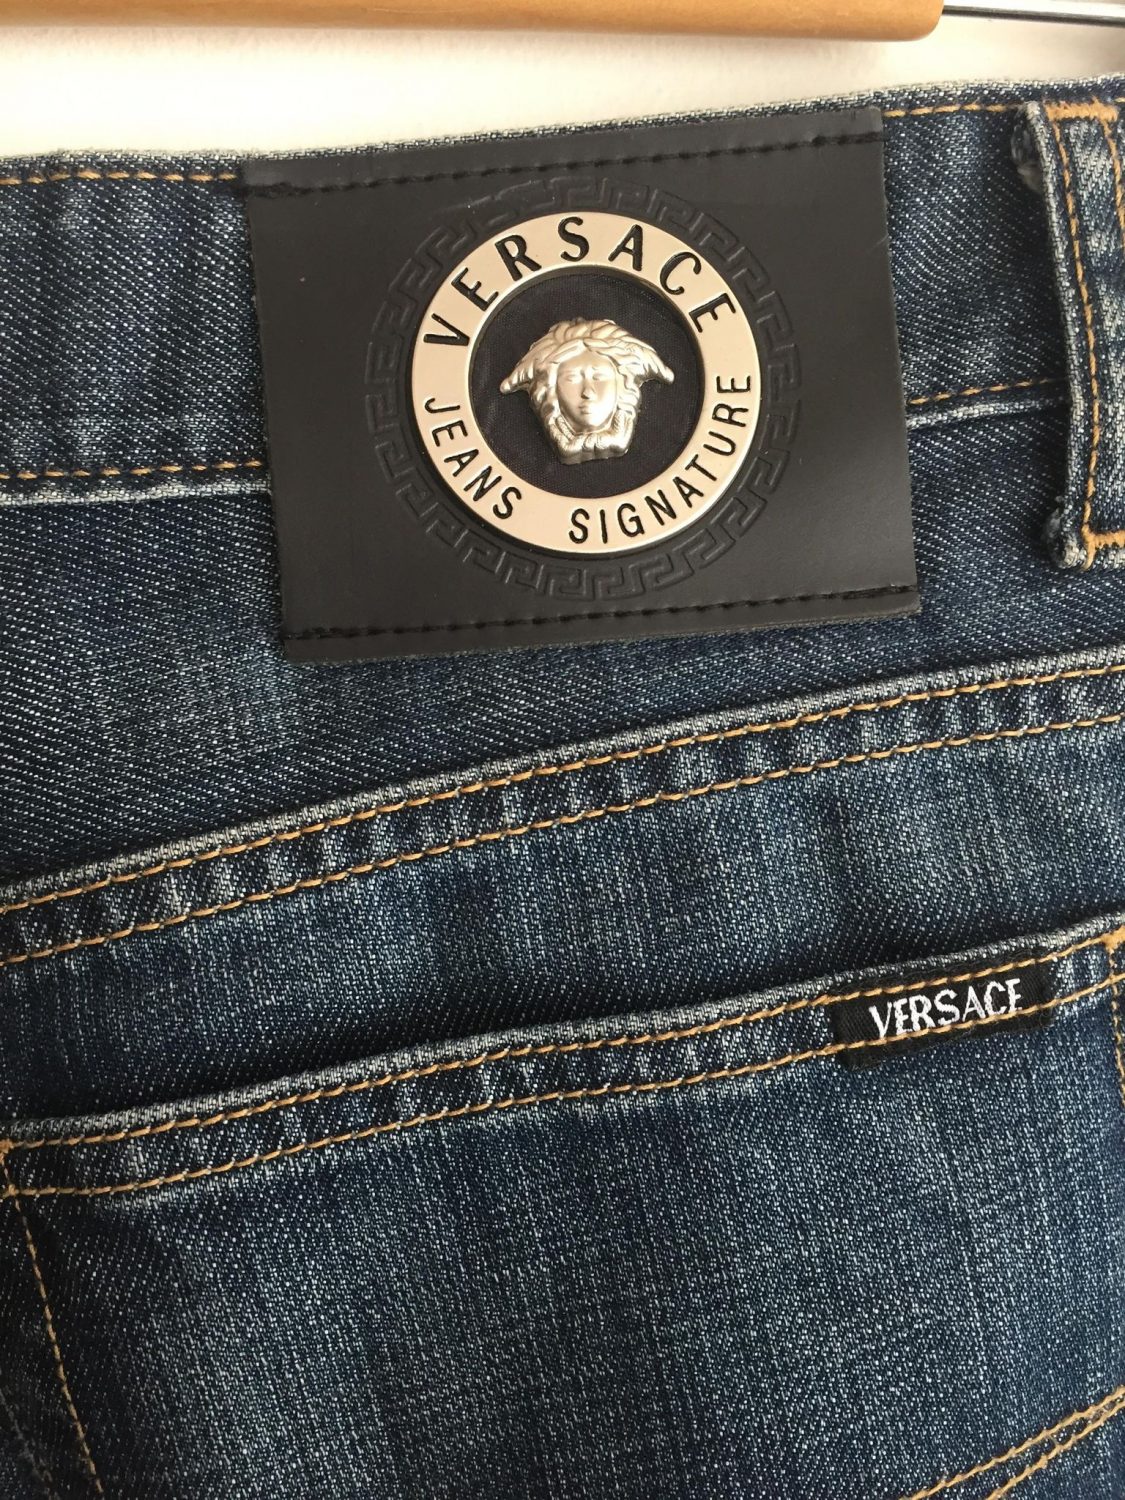 Original Vintage Versace Signature Jeans | Chaos Bazaar Vintage